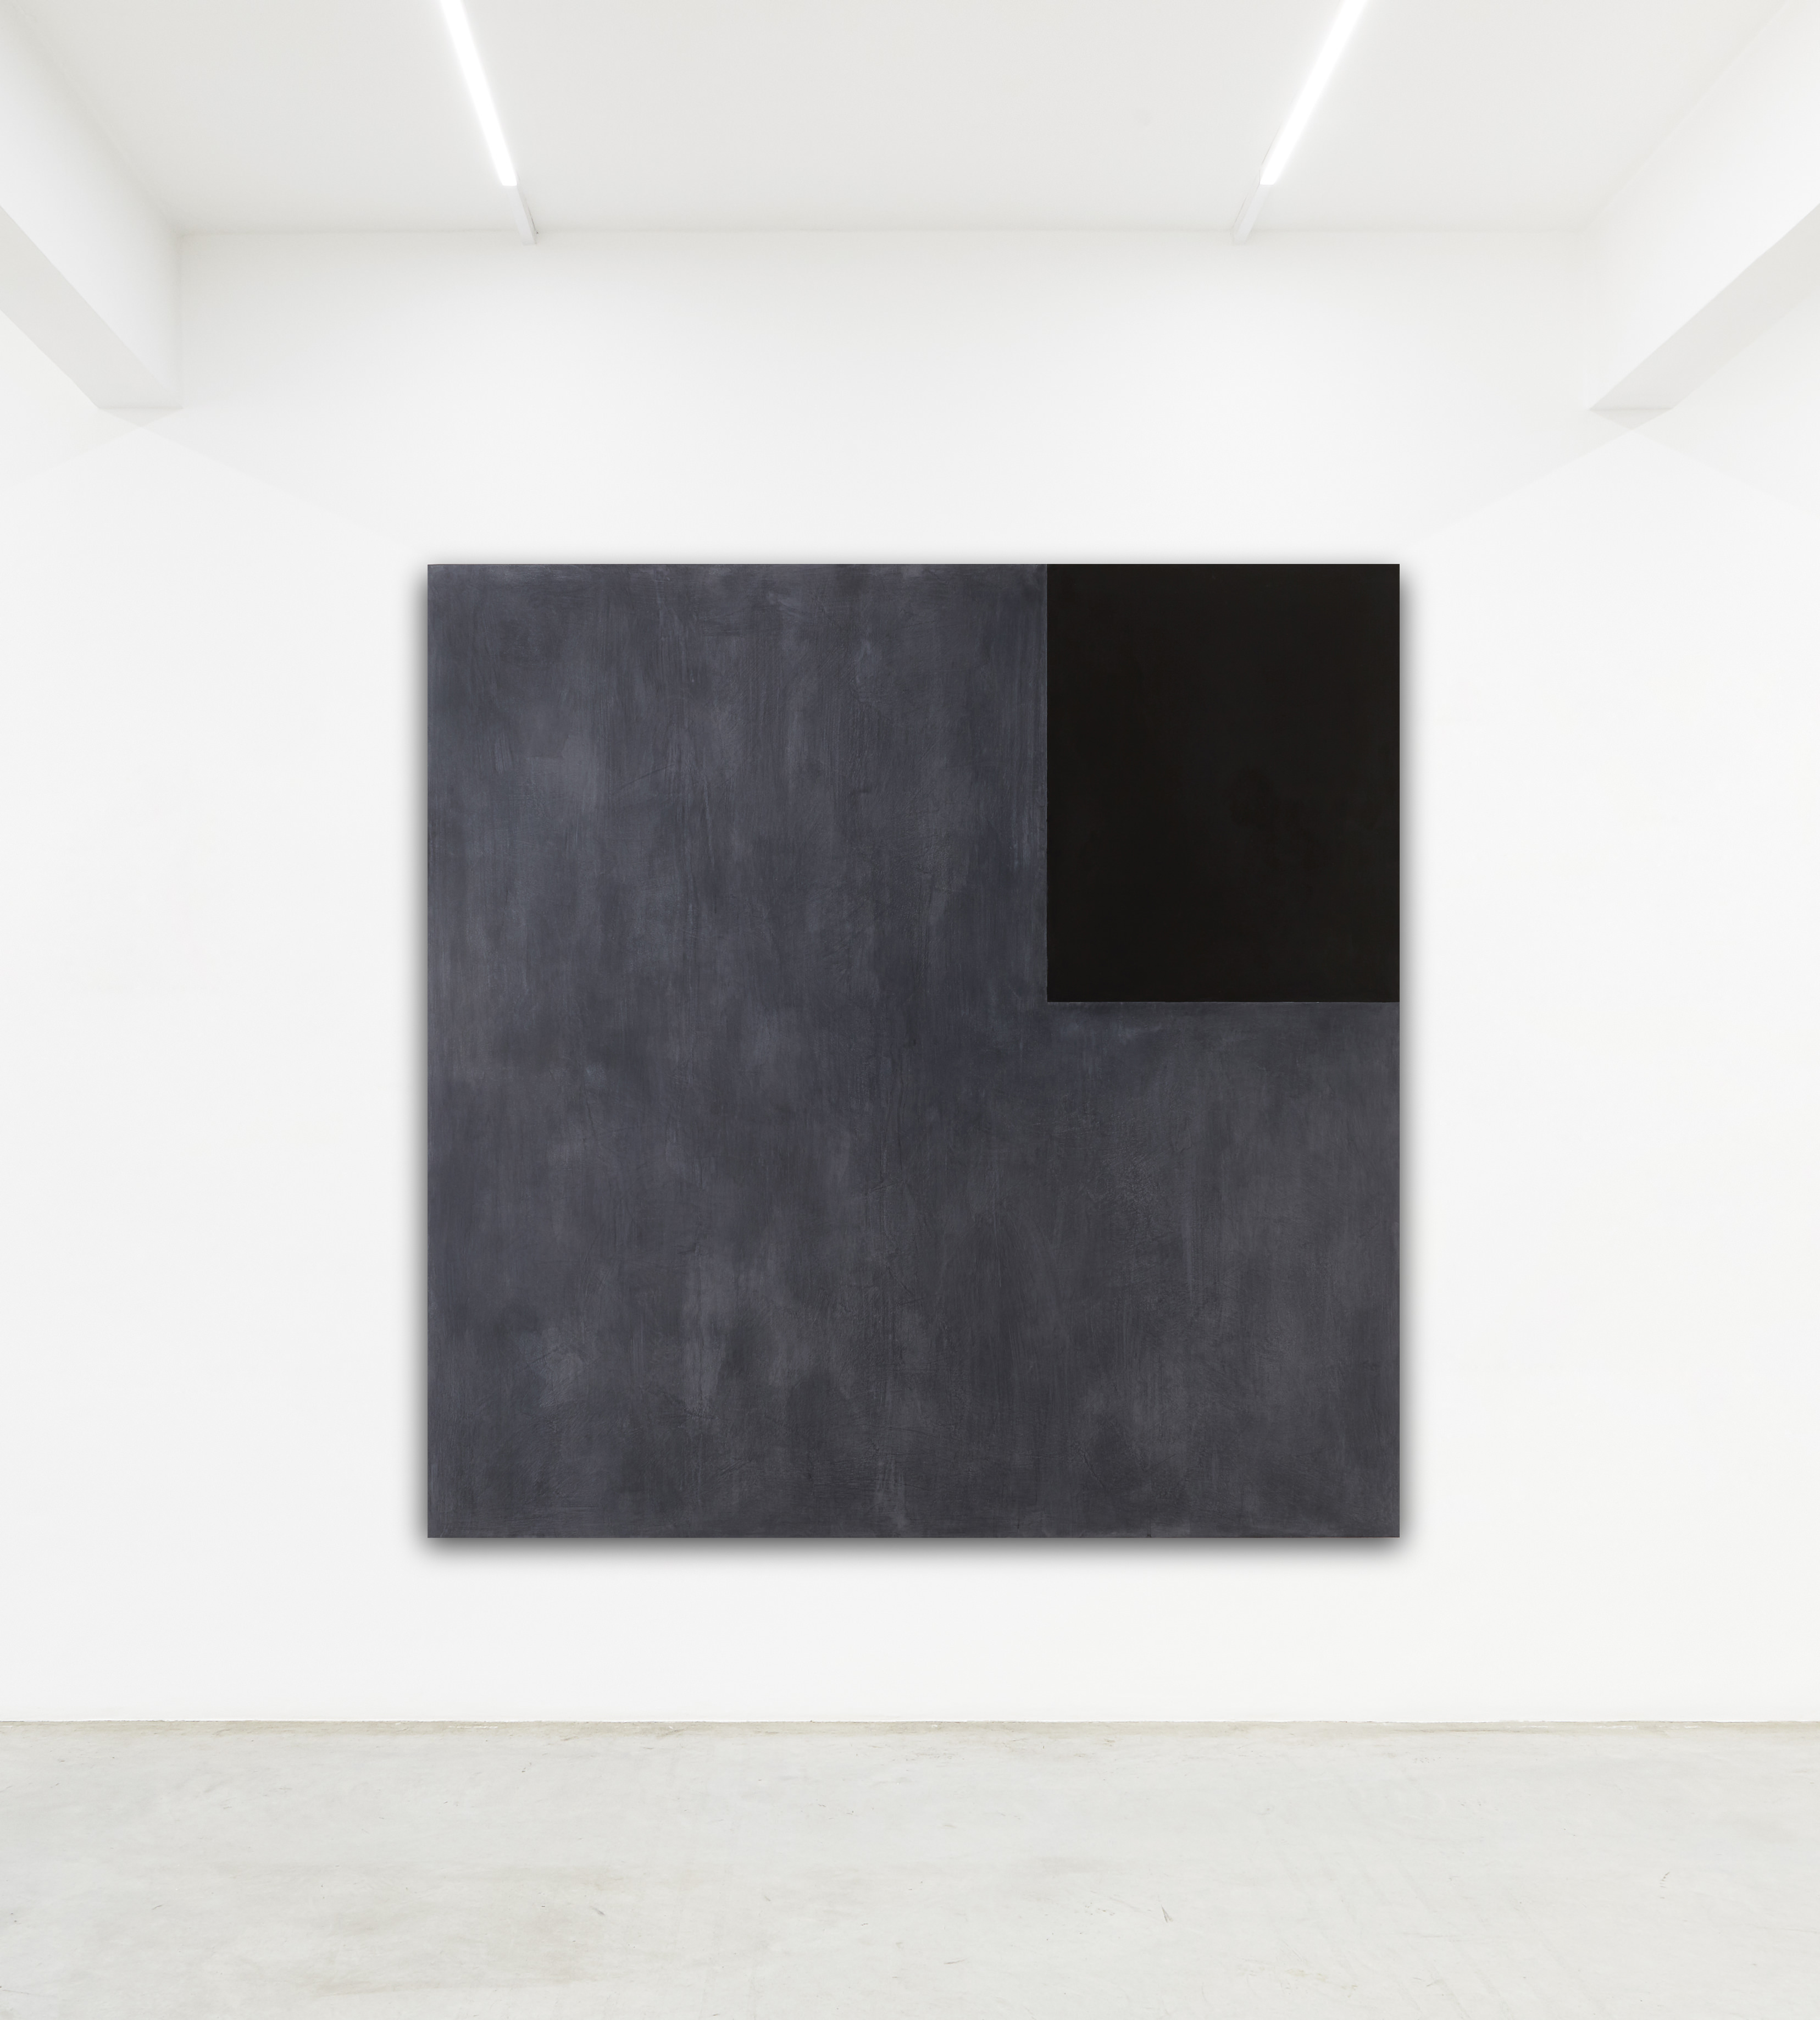 Paolo Serra, Untitled, 2015, acrylic on panel, 150 x 150 cm